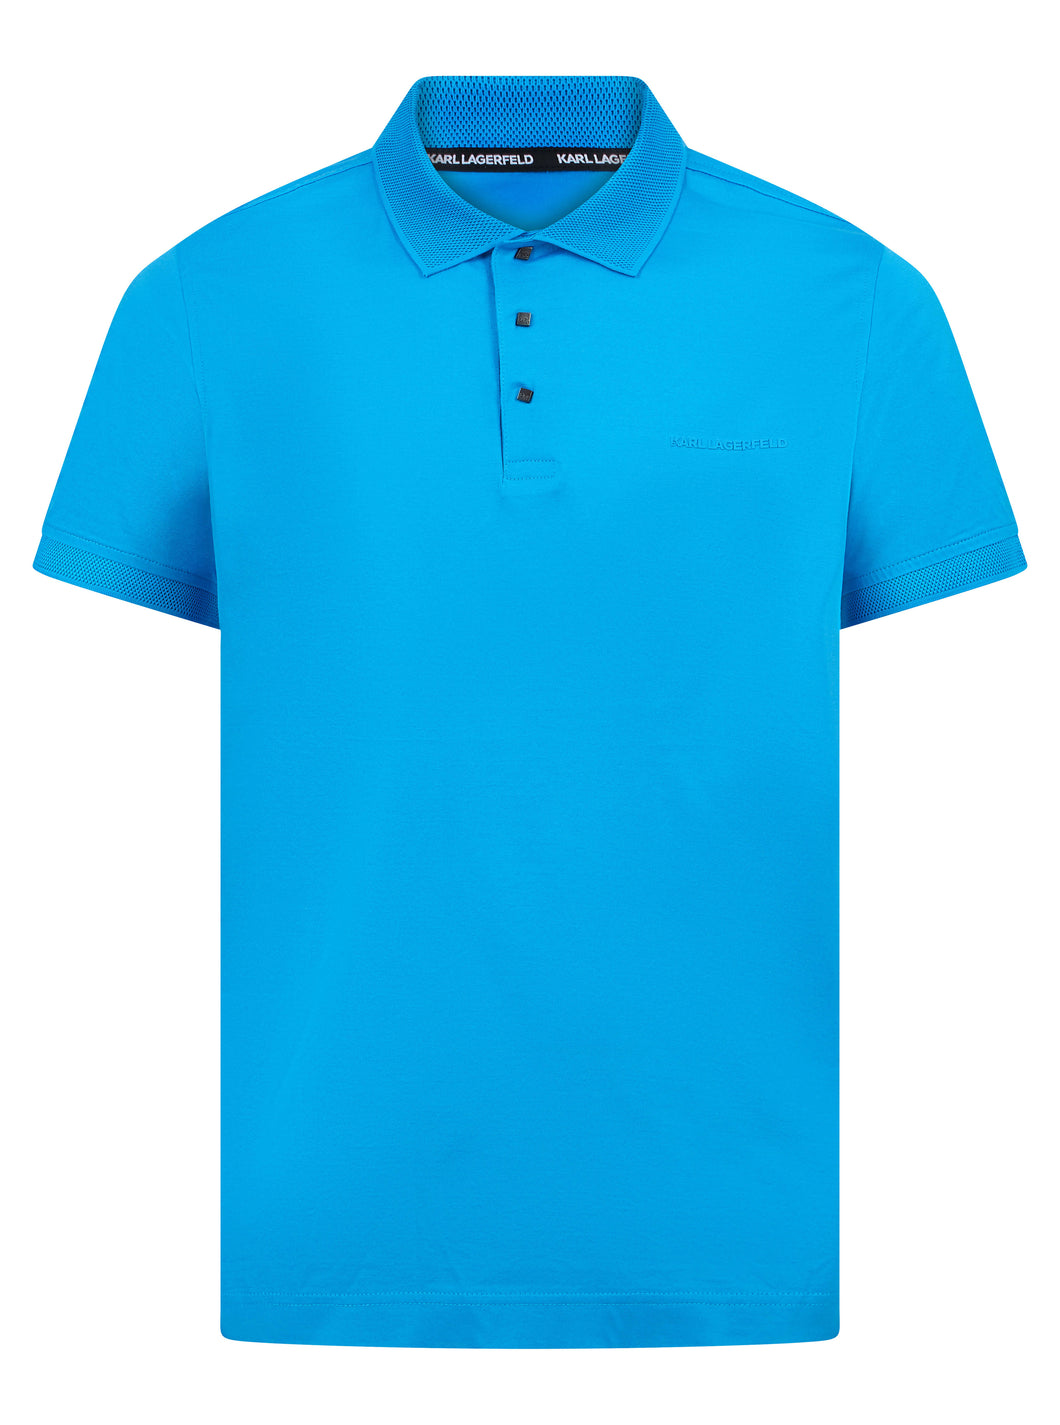 Lagerfeld Tonal Logo Polo Shirt Aqua Blue